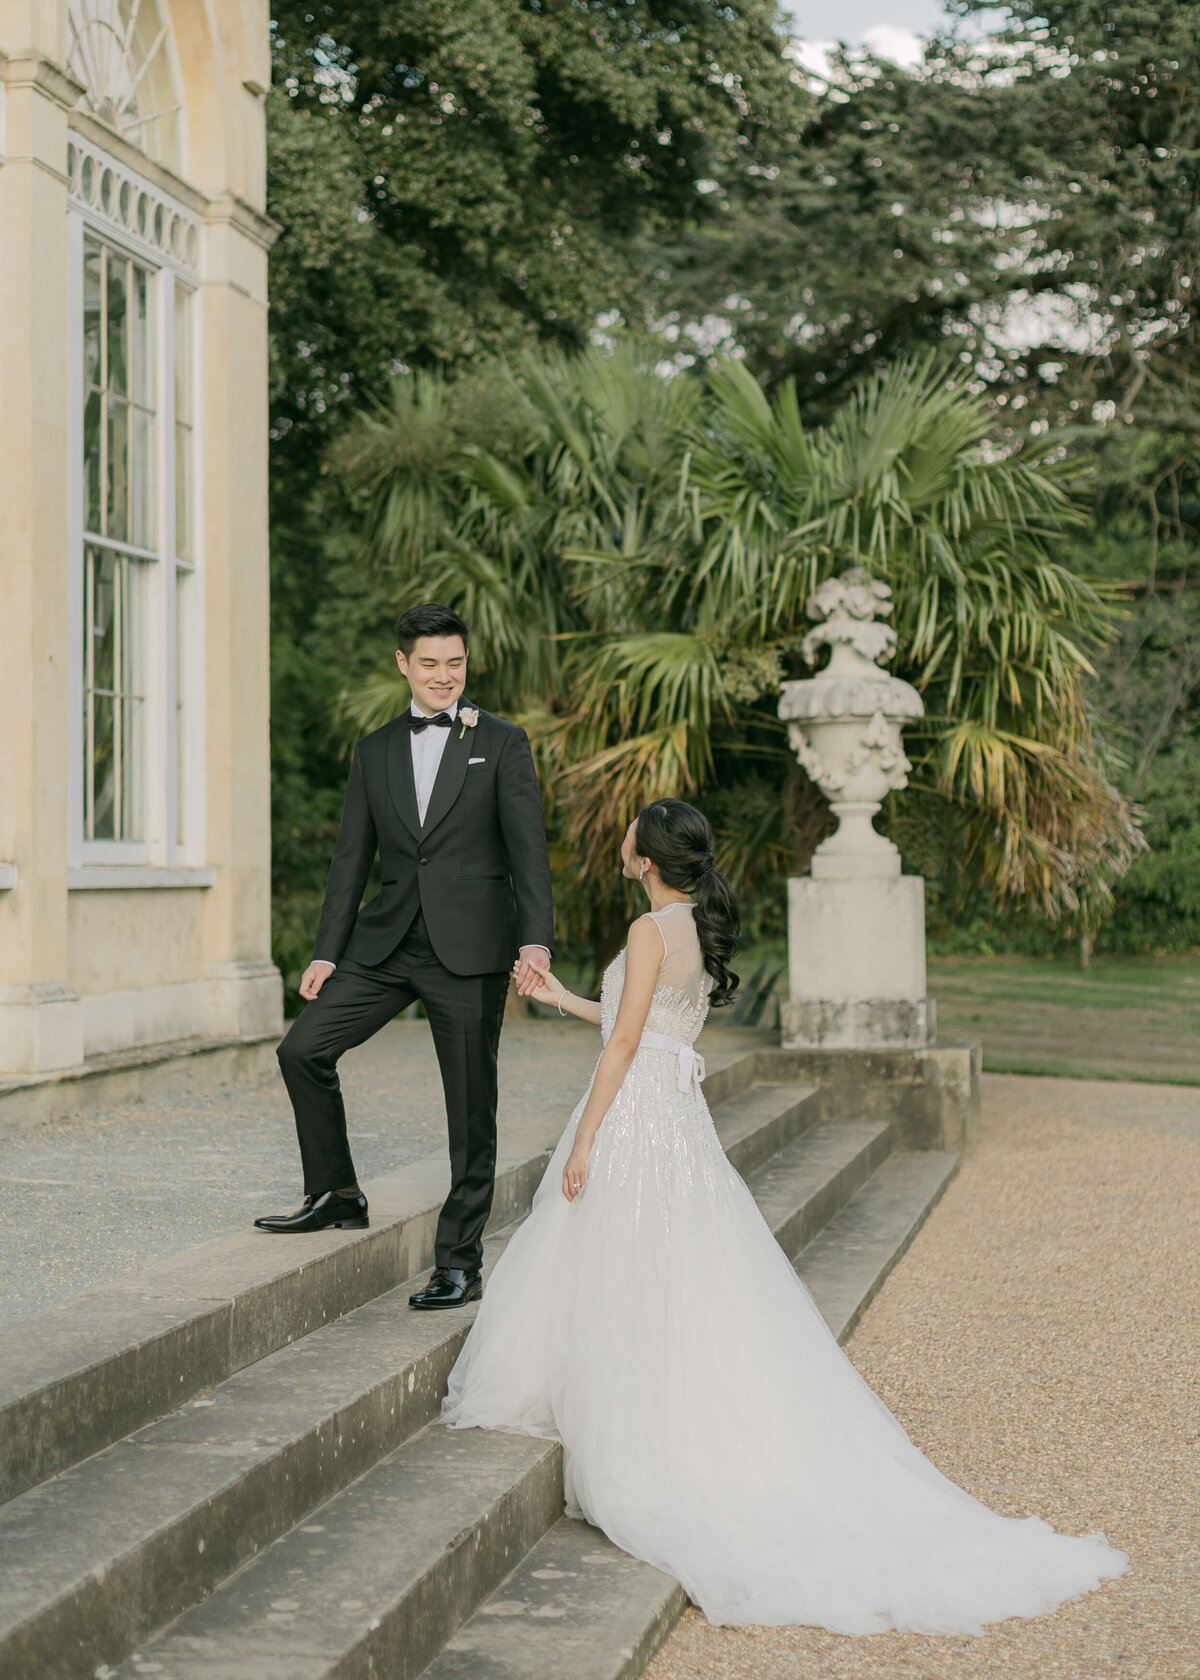 chloe-winstanley-weddings-syon-park-elie-saab-gown-conservatory-steps